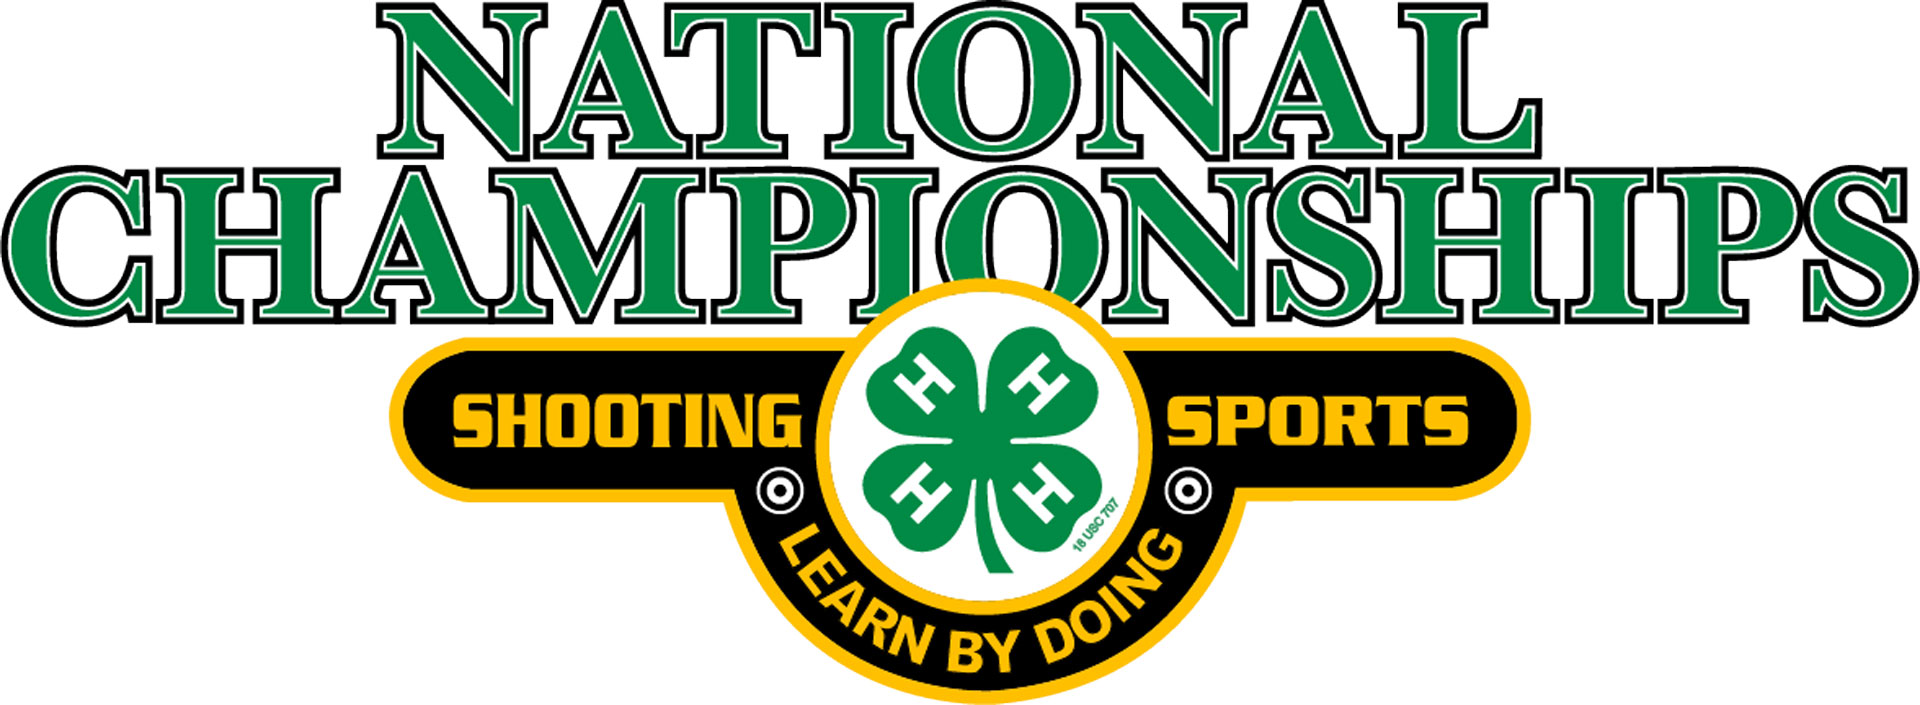 4H Shooting Sports National Championships logo